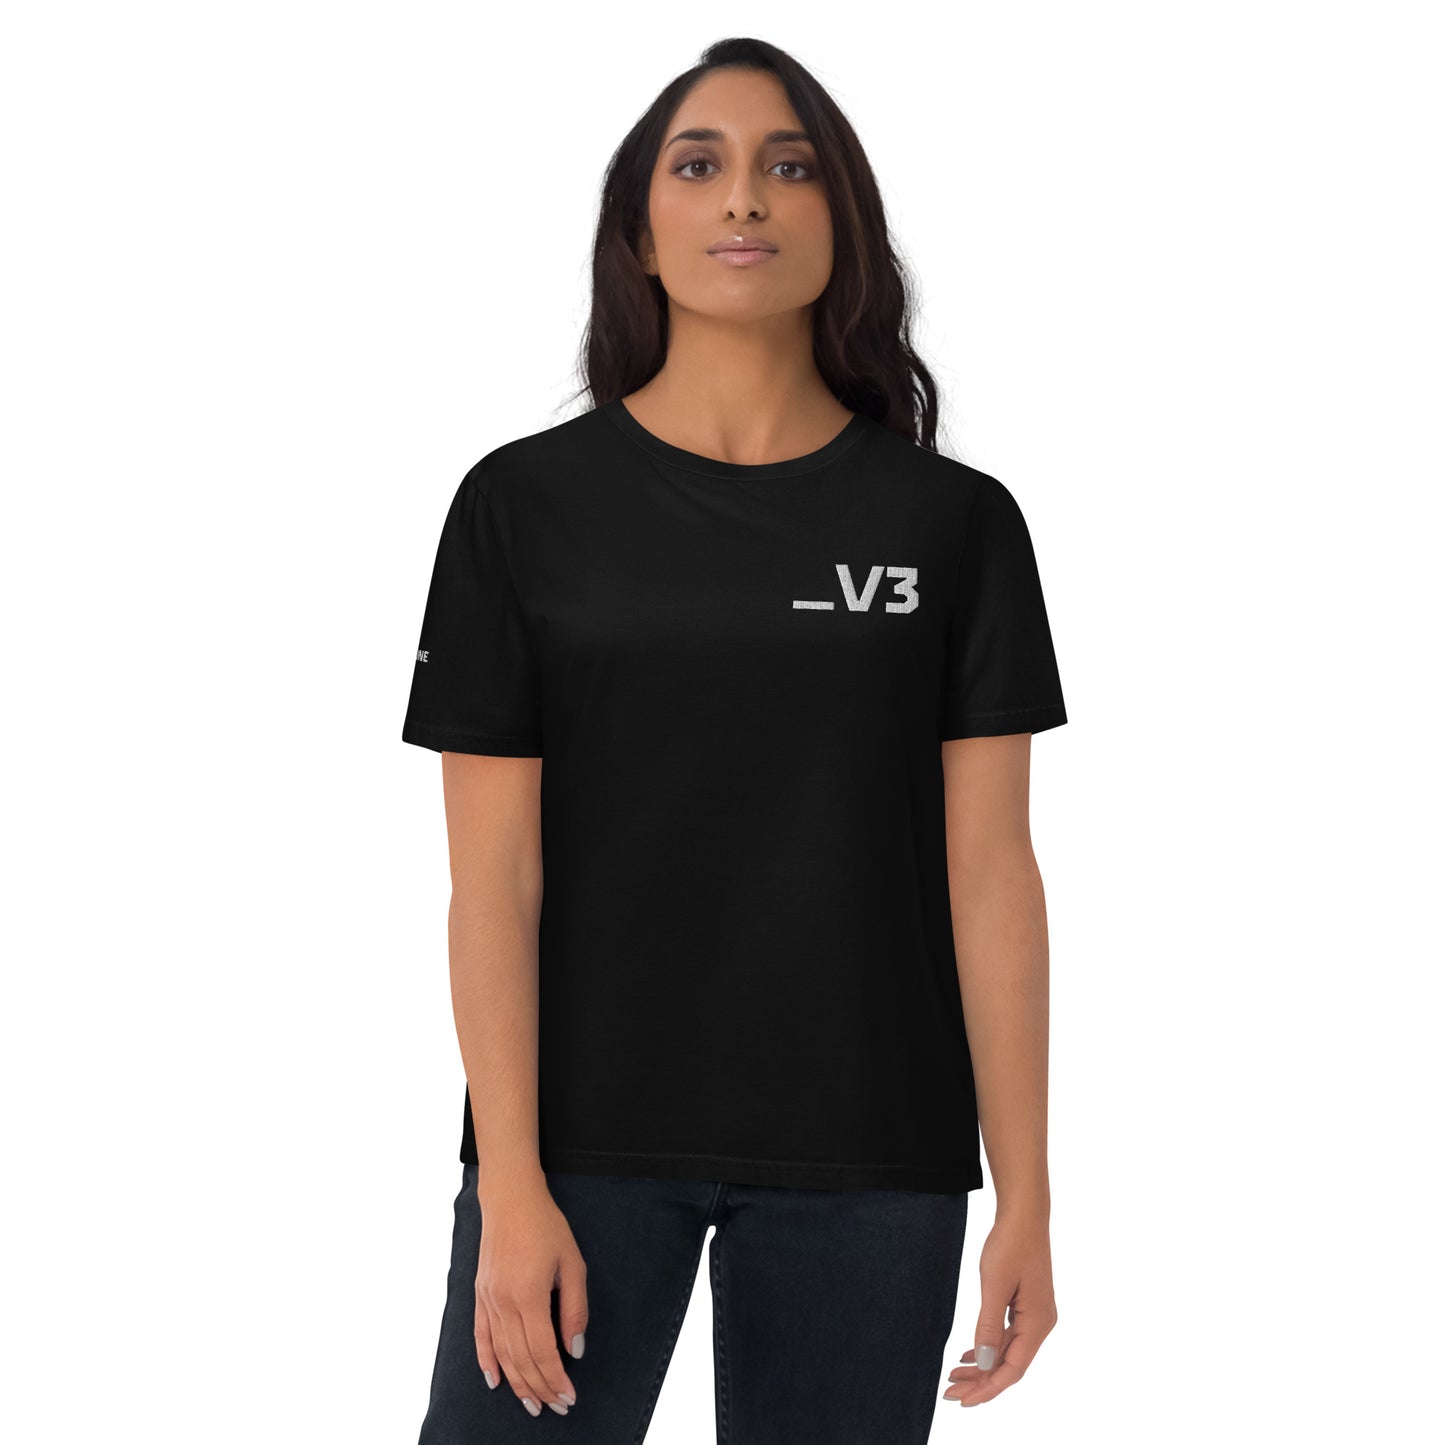 _V3 Embroidered Unisex organic cotton t-shirt